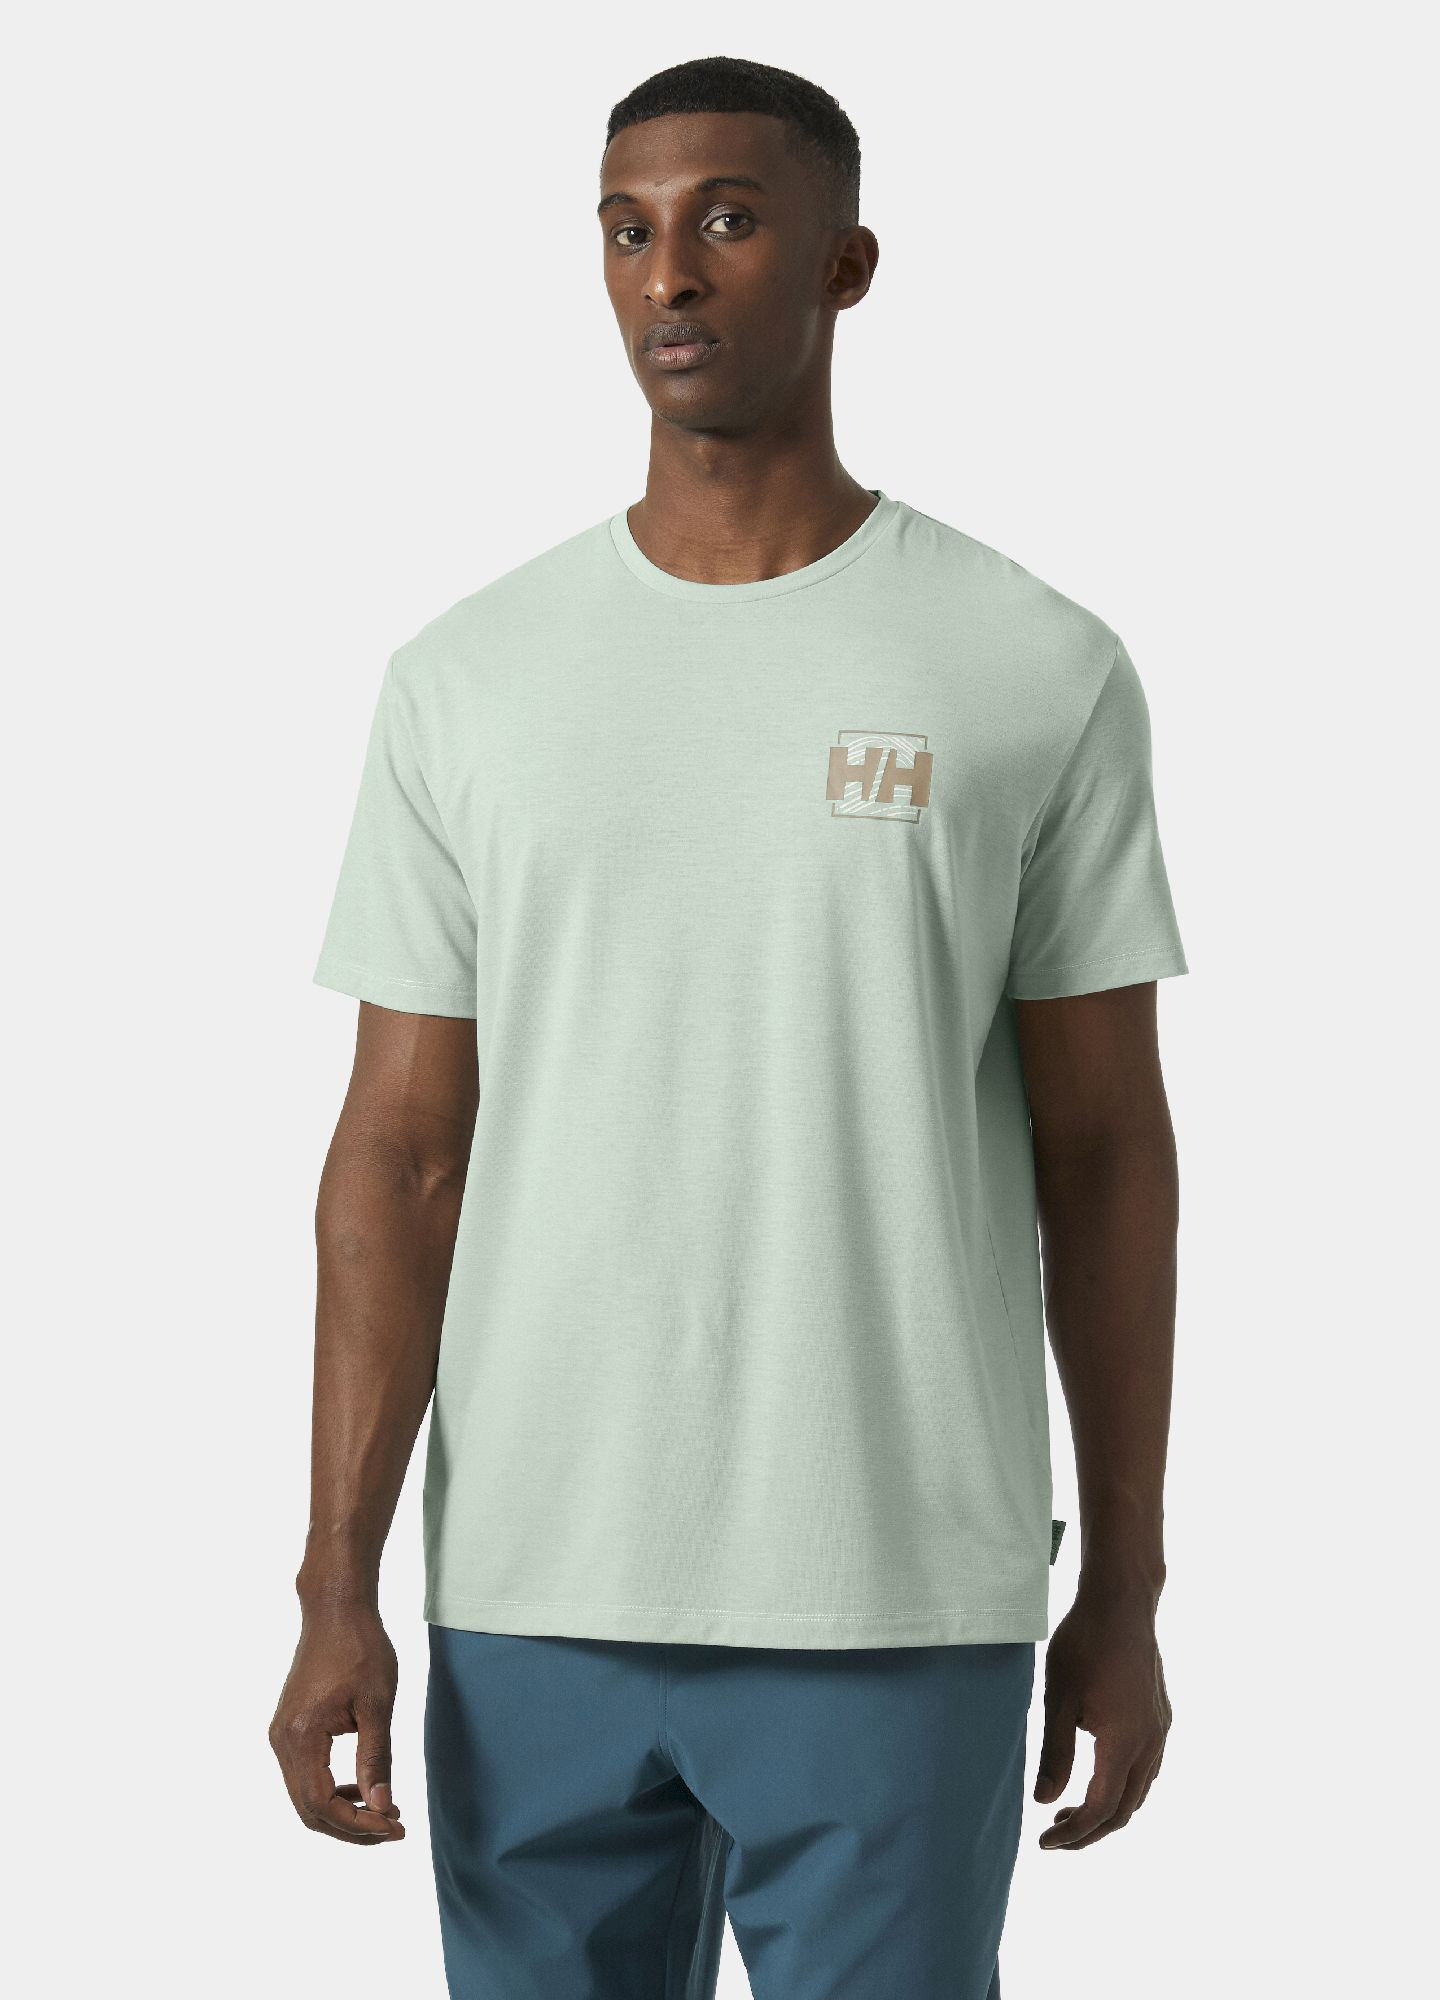 Helly Hansen Skog Recycled Graphic T-Shirt - T-shirt homme | Hardloop